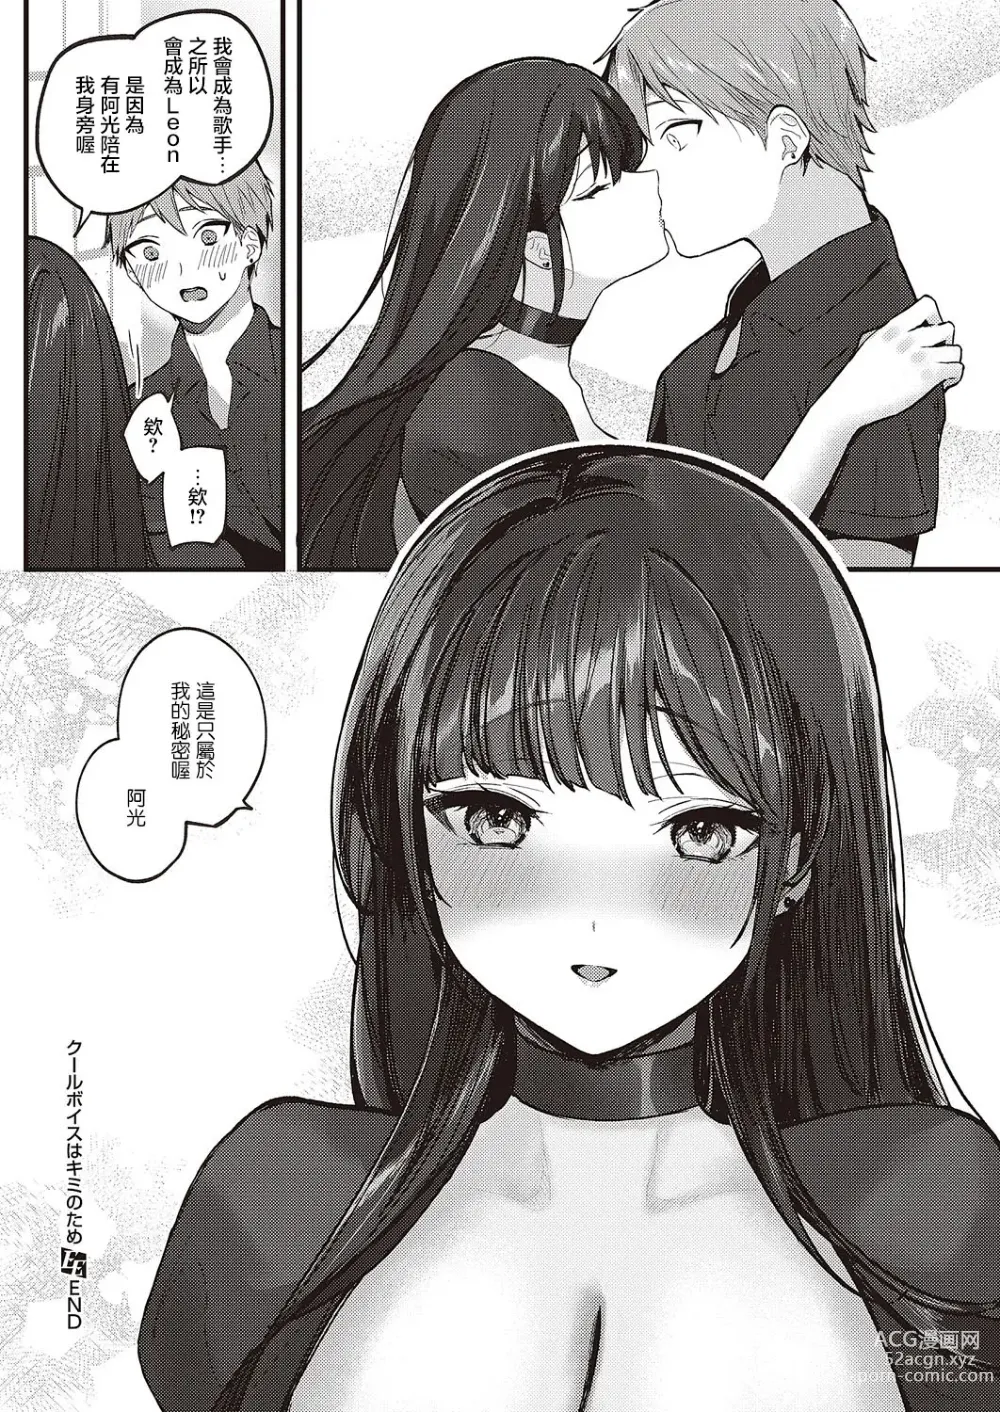 Page 32 of manga Cool Voice wa Kimi no Tame